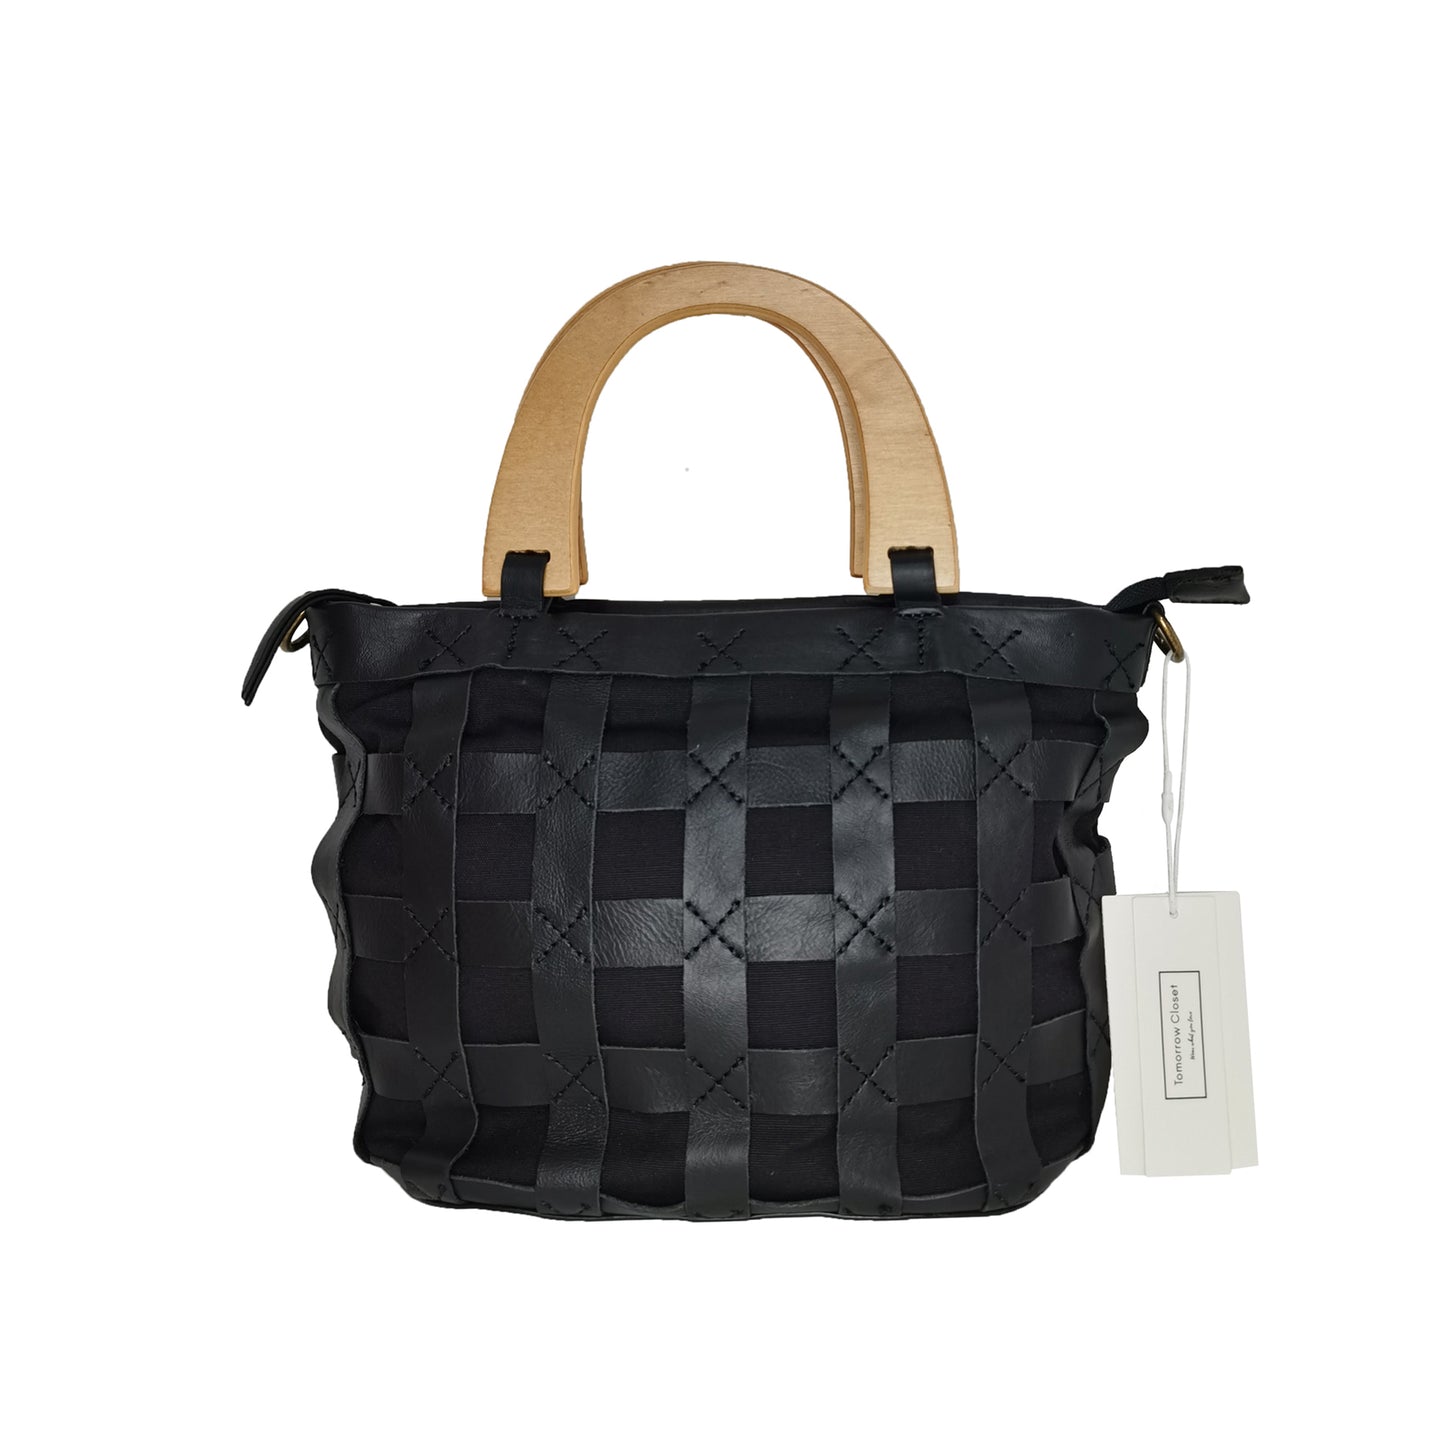 [Sale] Women's genuine cowhide leather handbag Bracelet woven design